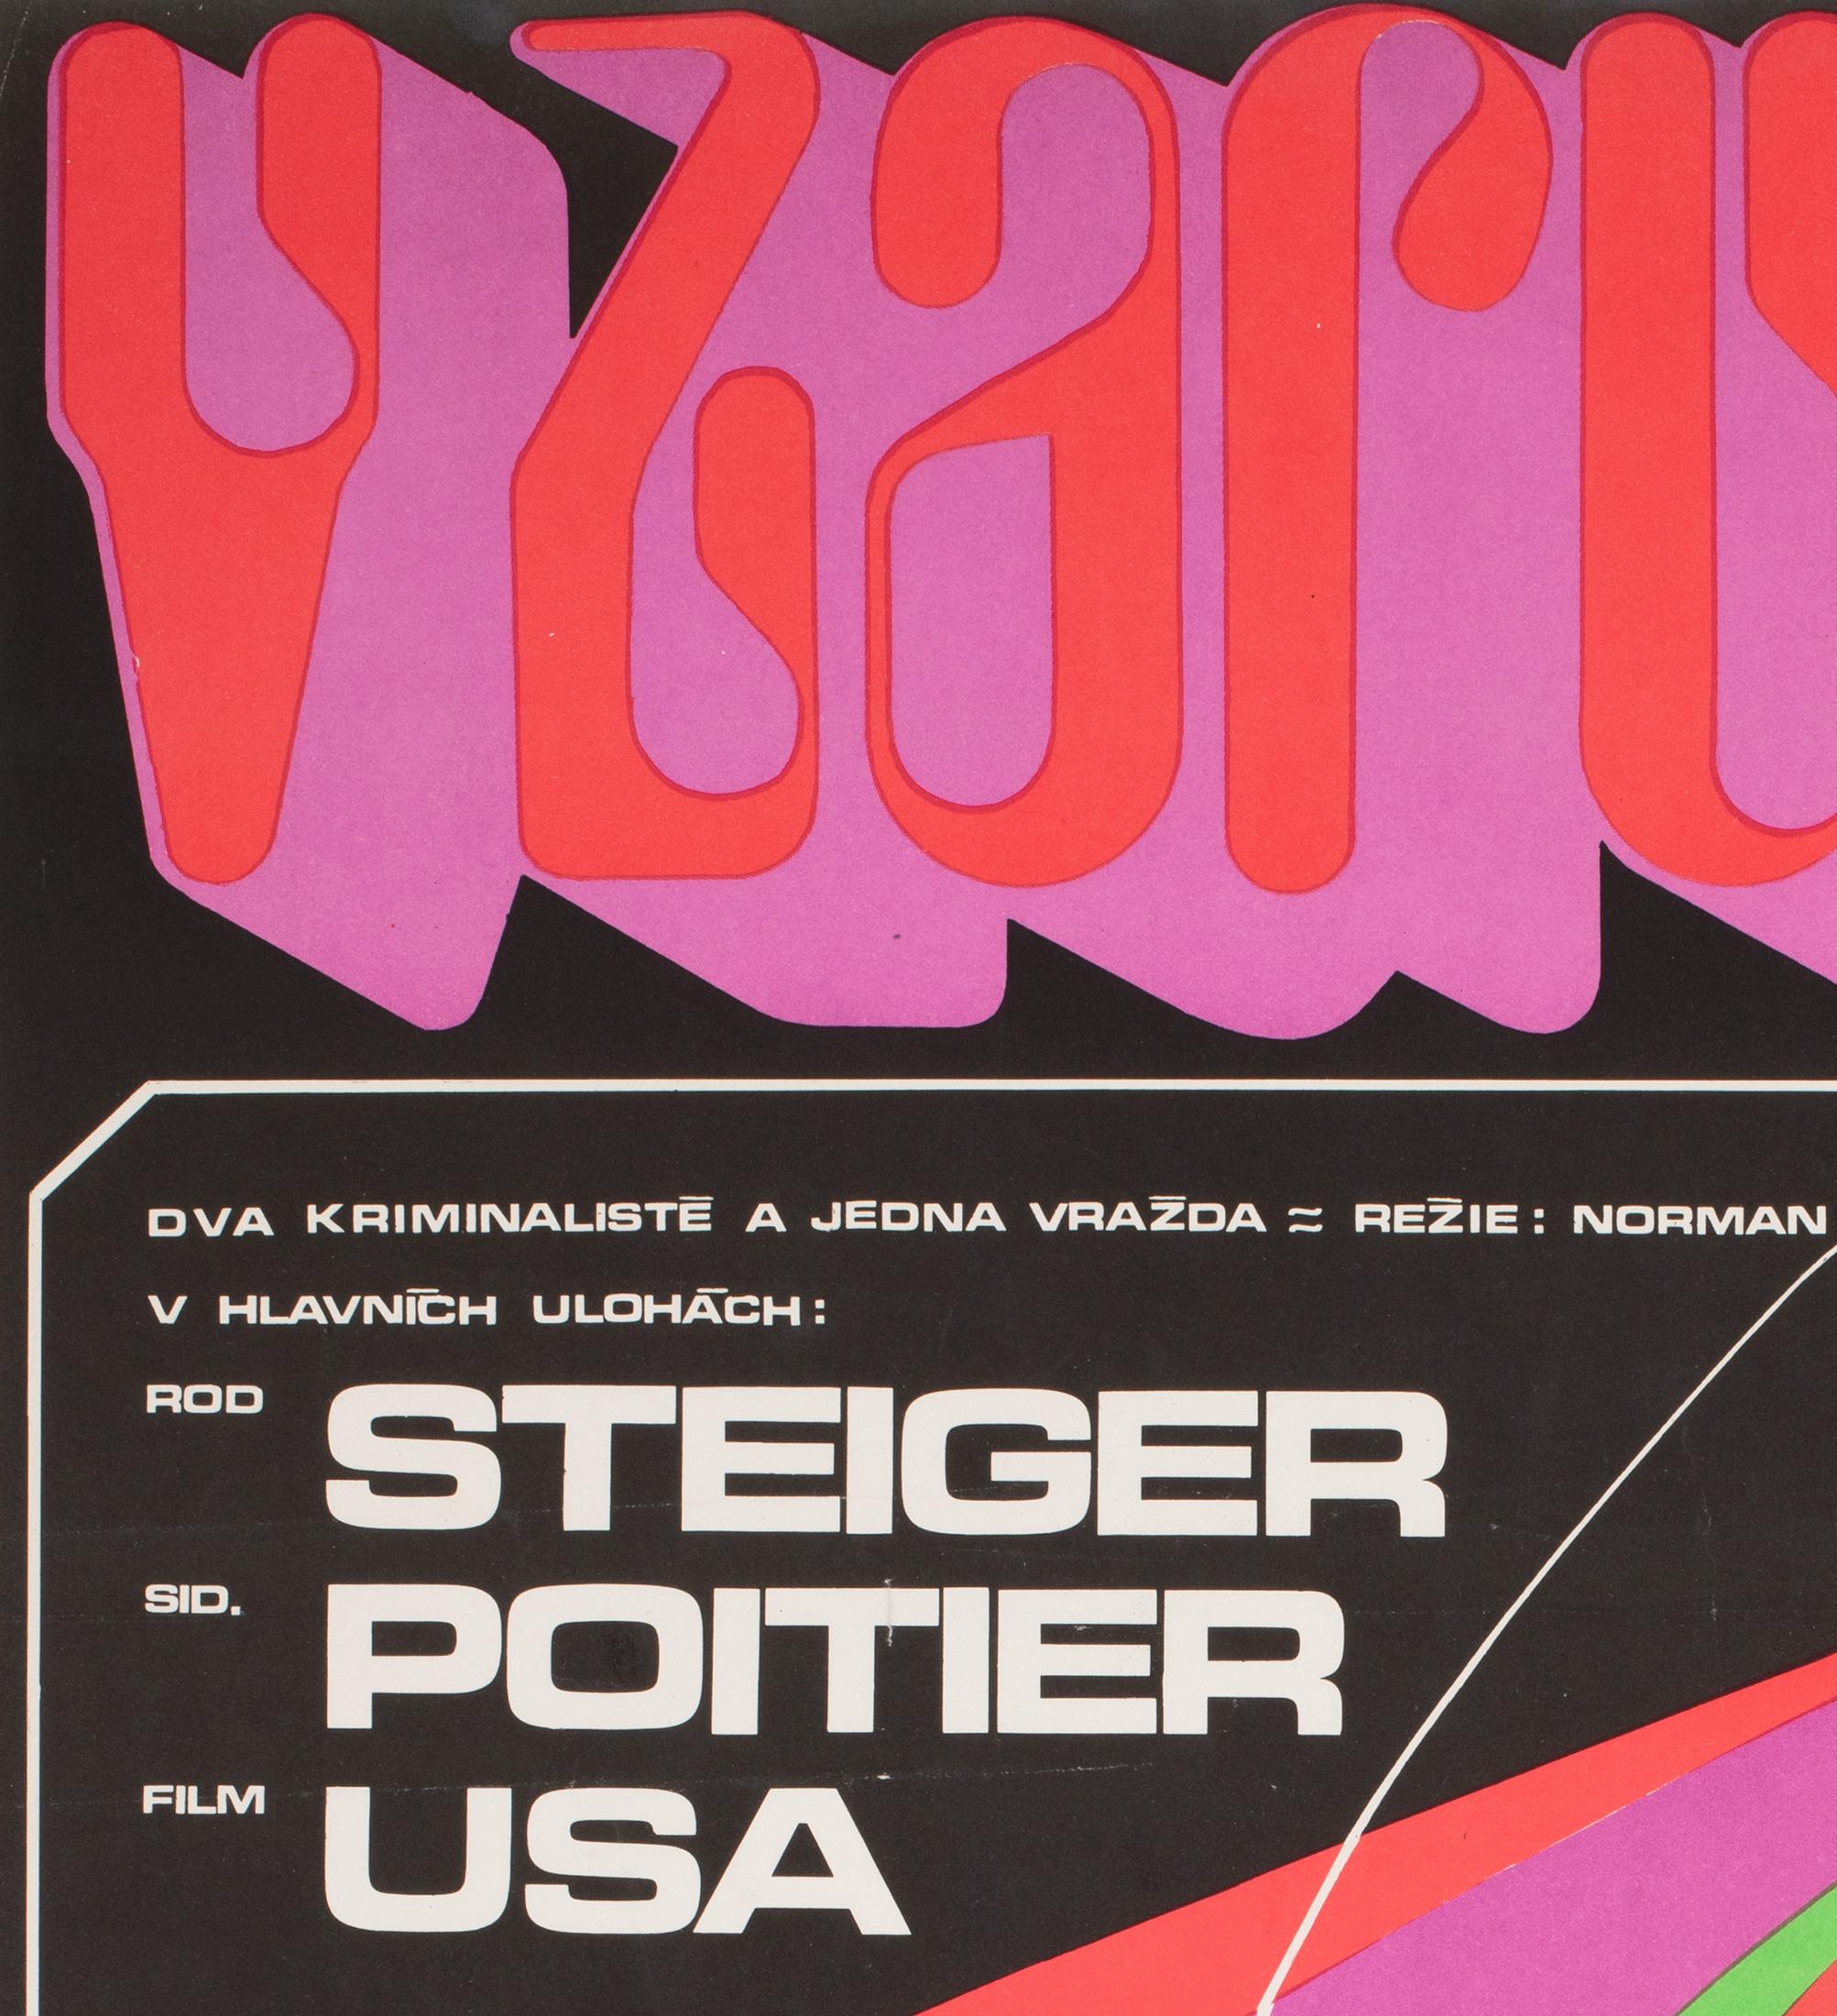 in the Heat of the Night Czech Film Movie Poster, Zdenek Kaplan, 1970 For Sale 2